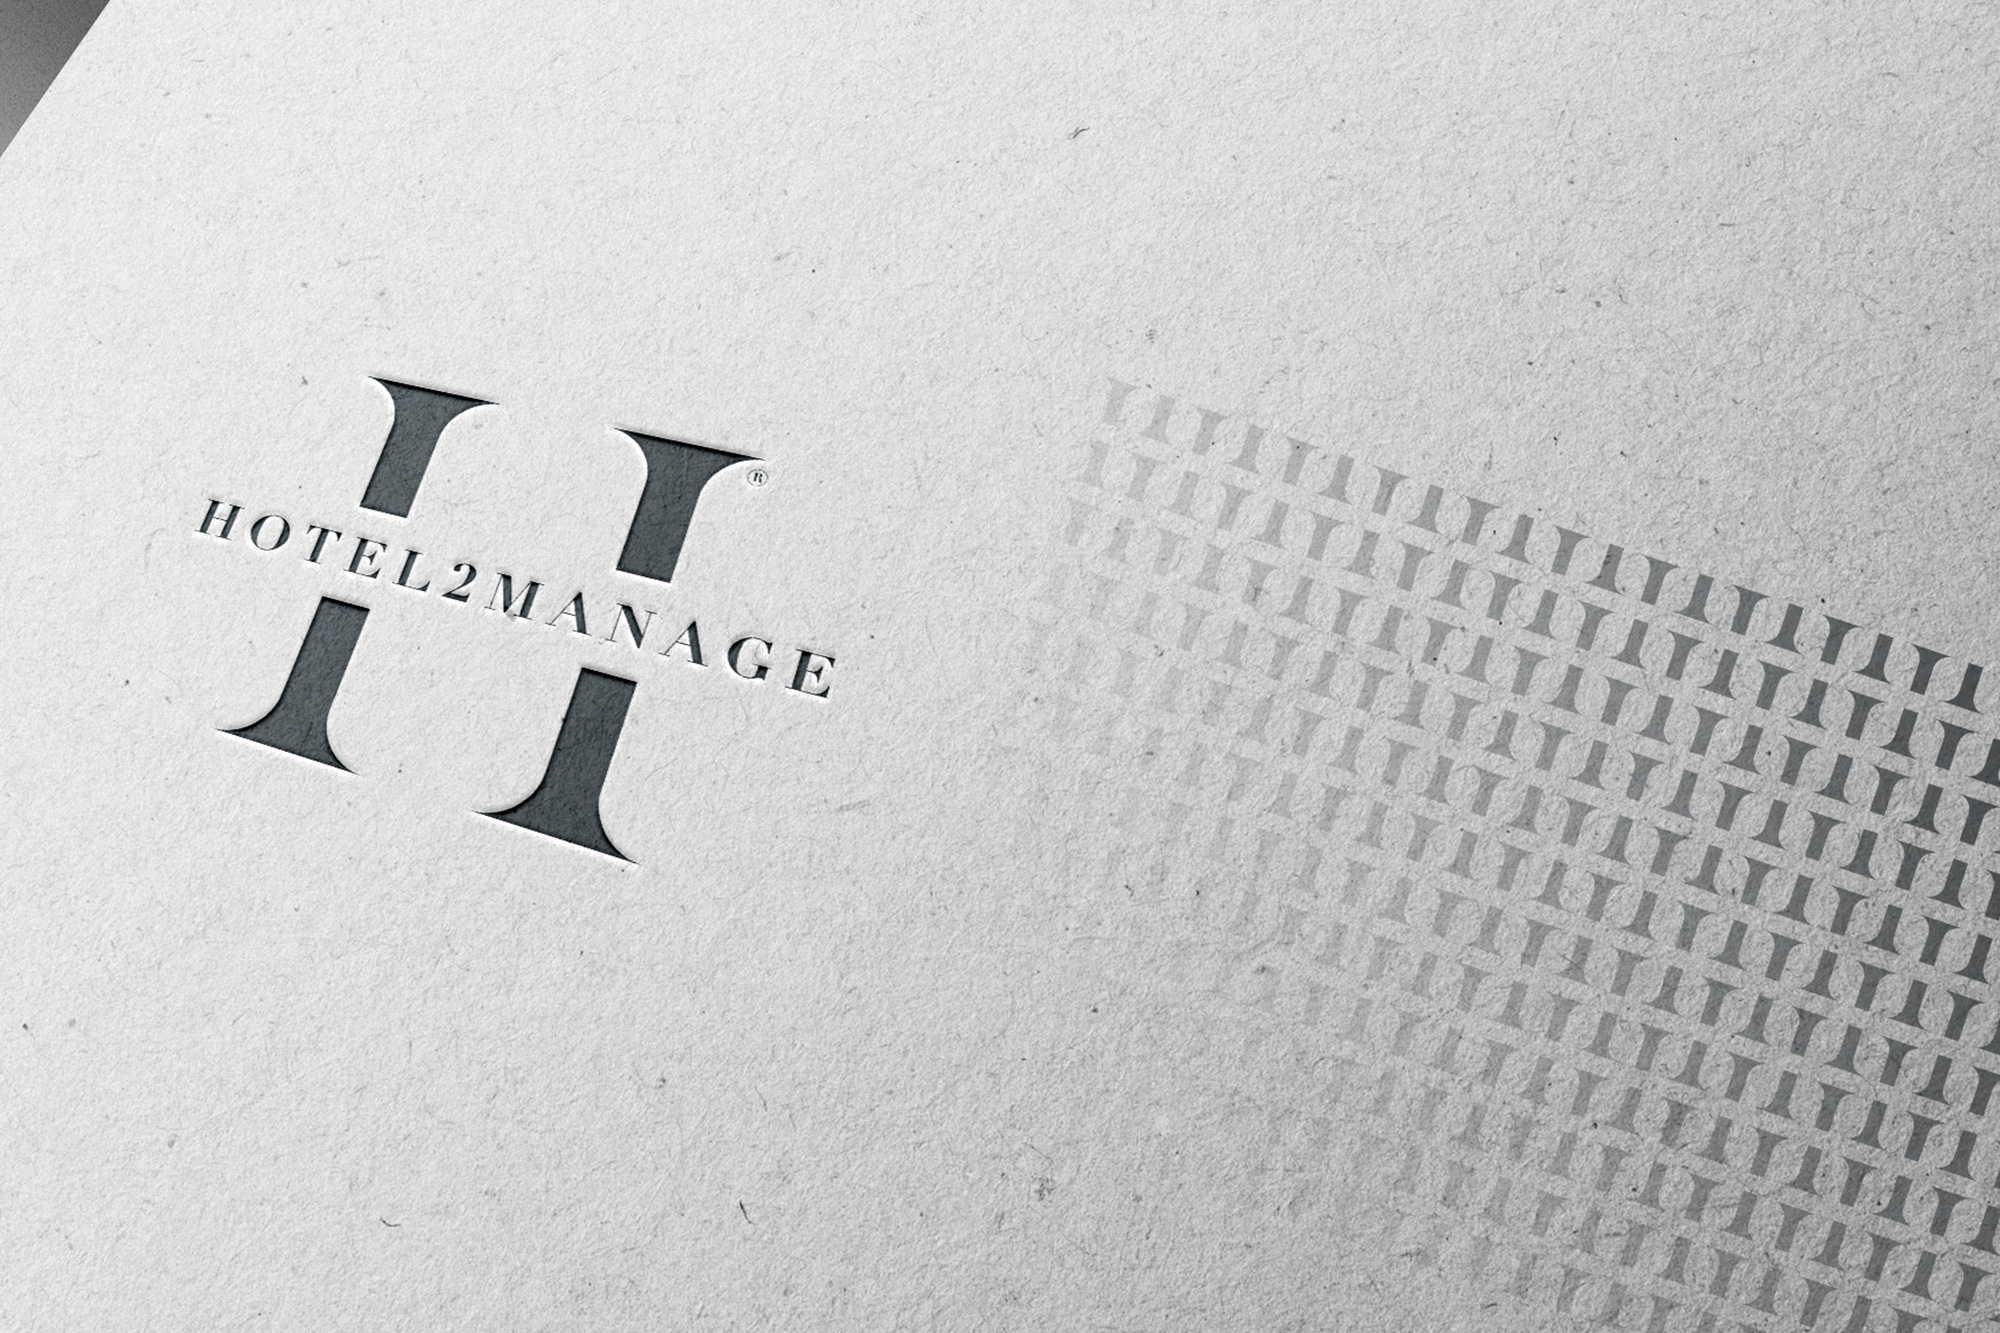 Hotel2Manage Logo and Corporate Identity